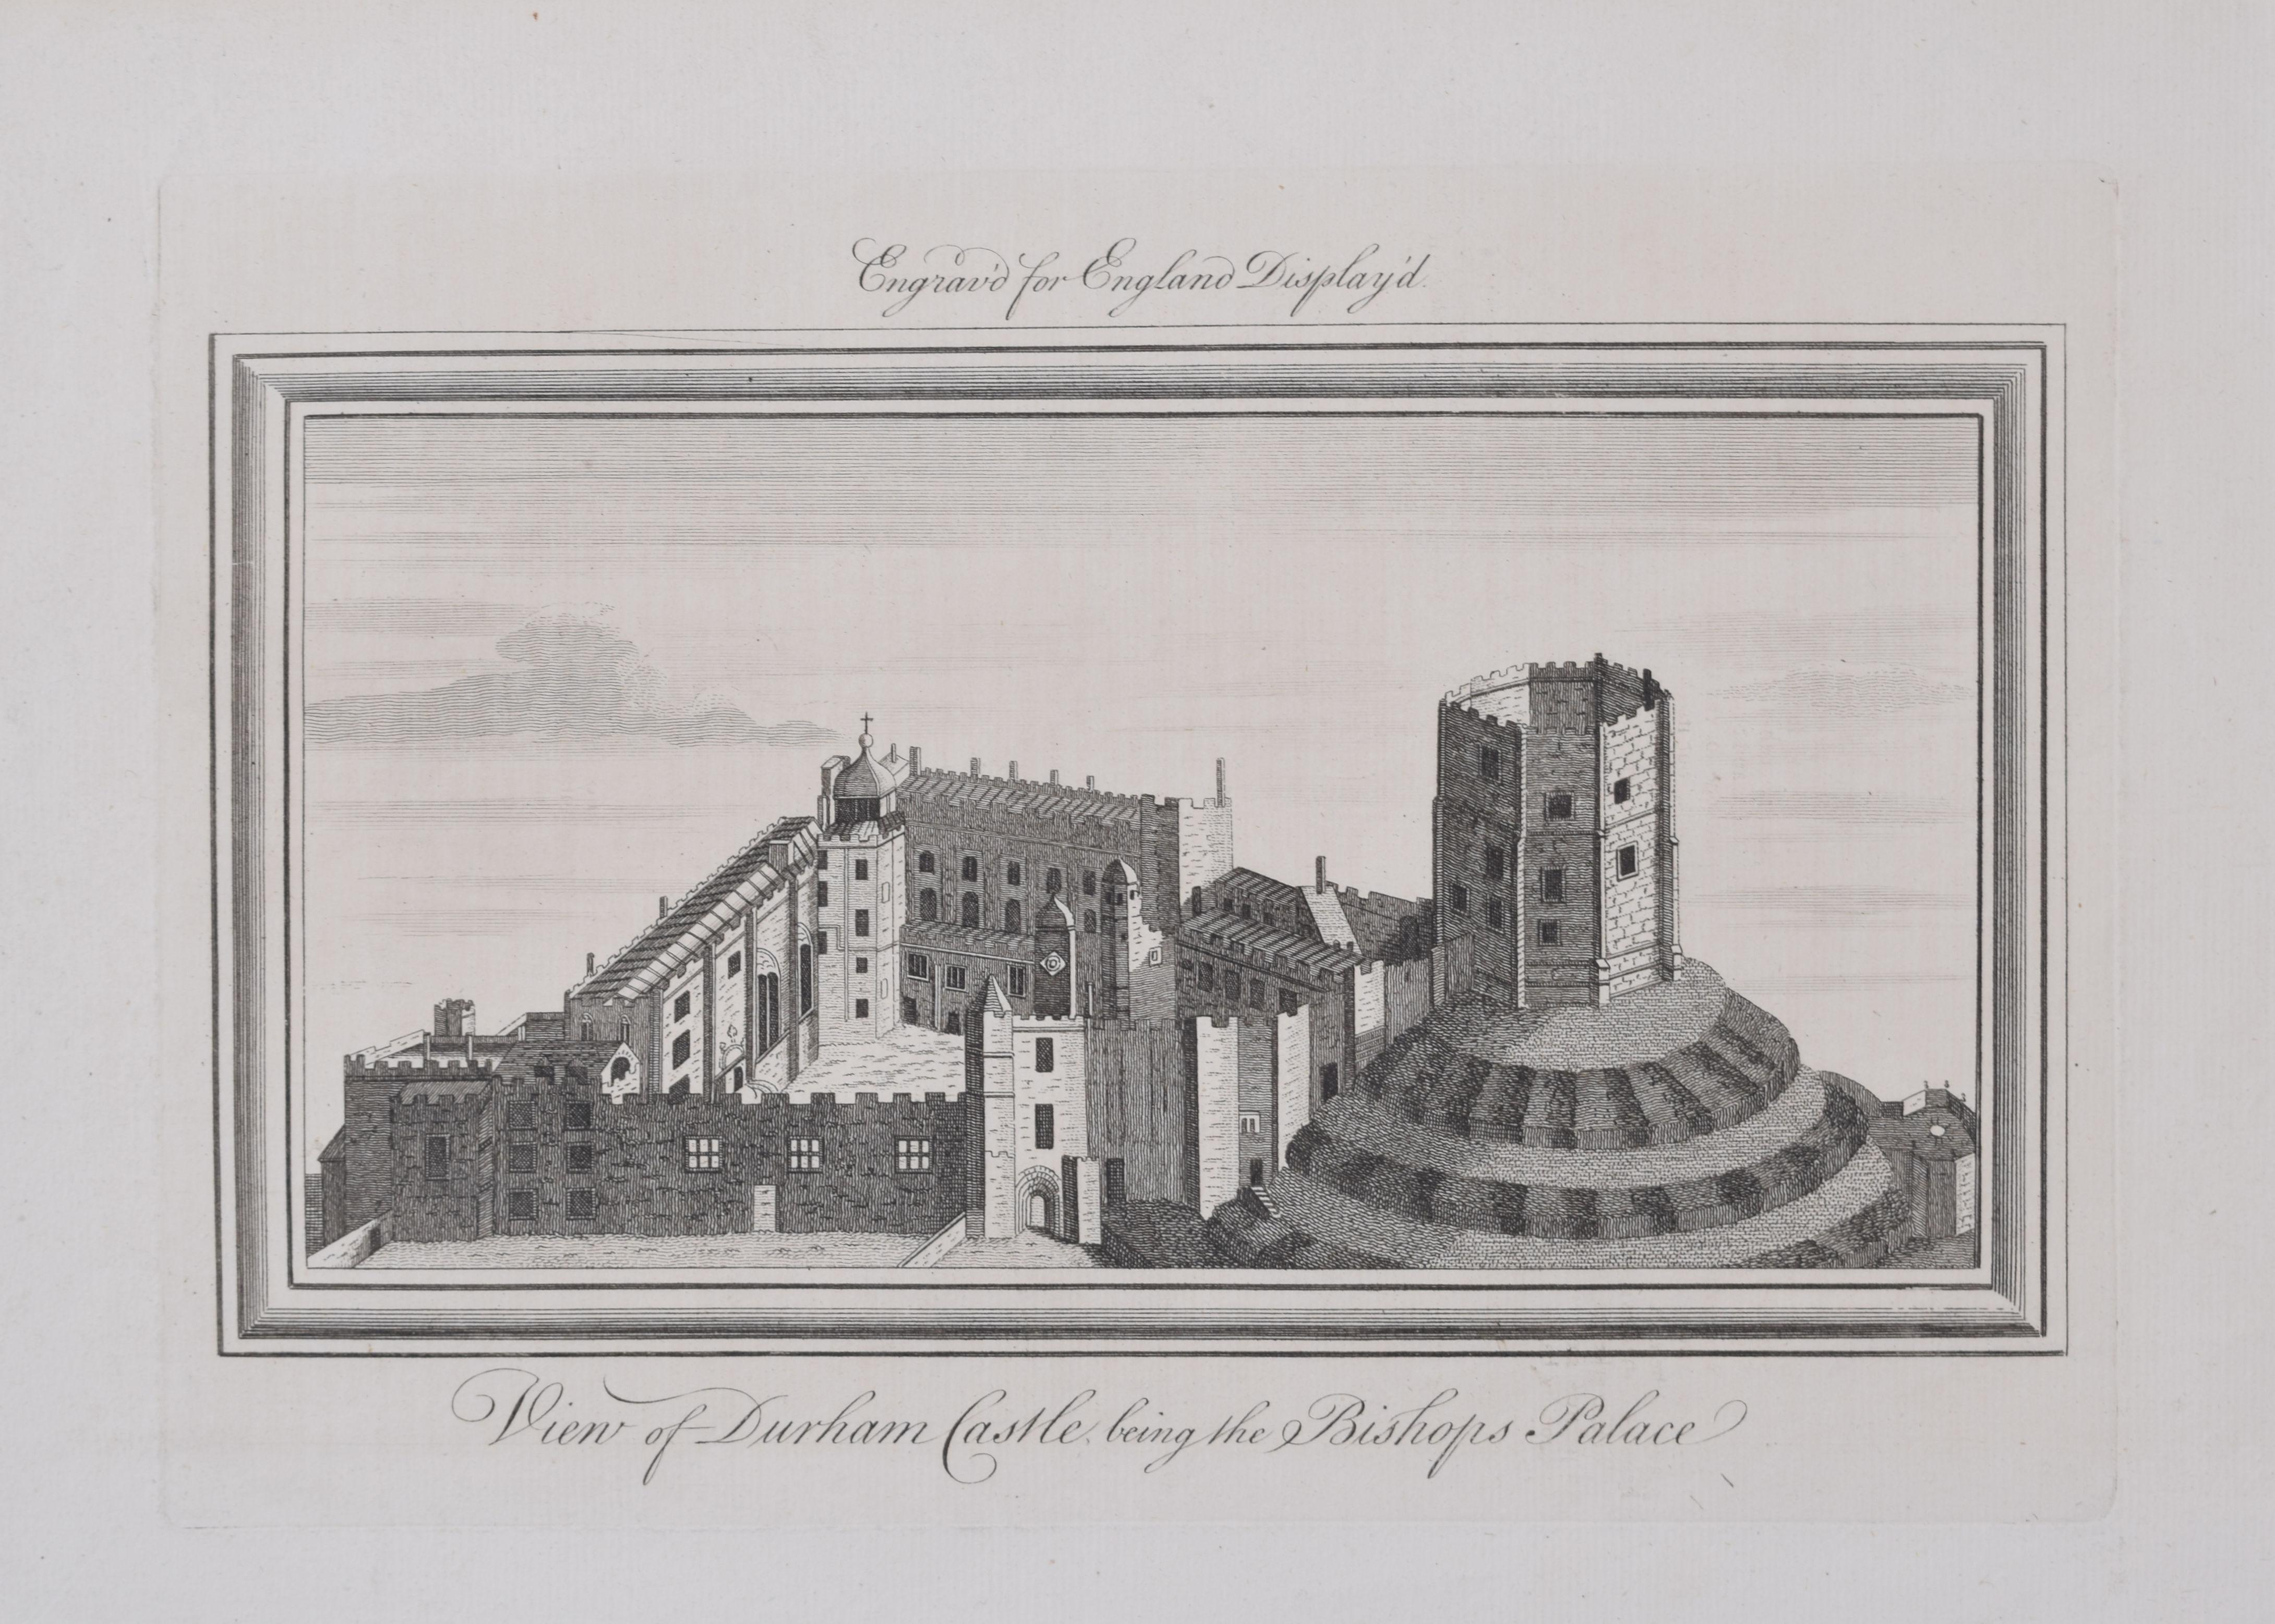 Samuel & Nathaniel Buck Landscape Print - Castle (University College, Durham) engraving after Samuel and Nathaniel Buck